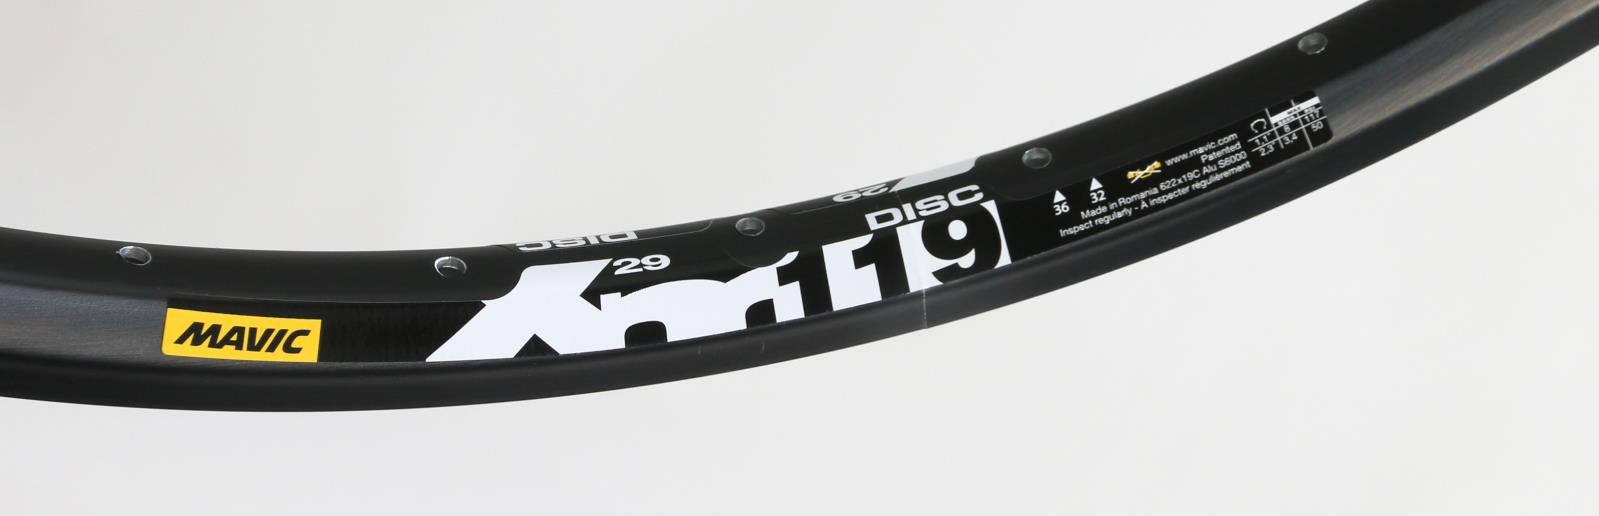 2 QTY 29er / 700c Mavic XM119 Disc 36 Hole MTB Bike Wheel Rims Black NEW - Random Bike Parts